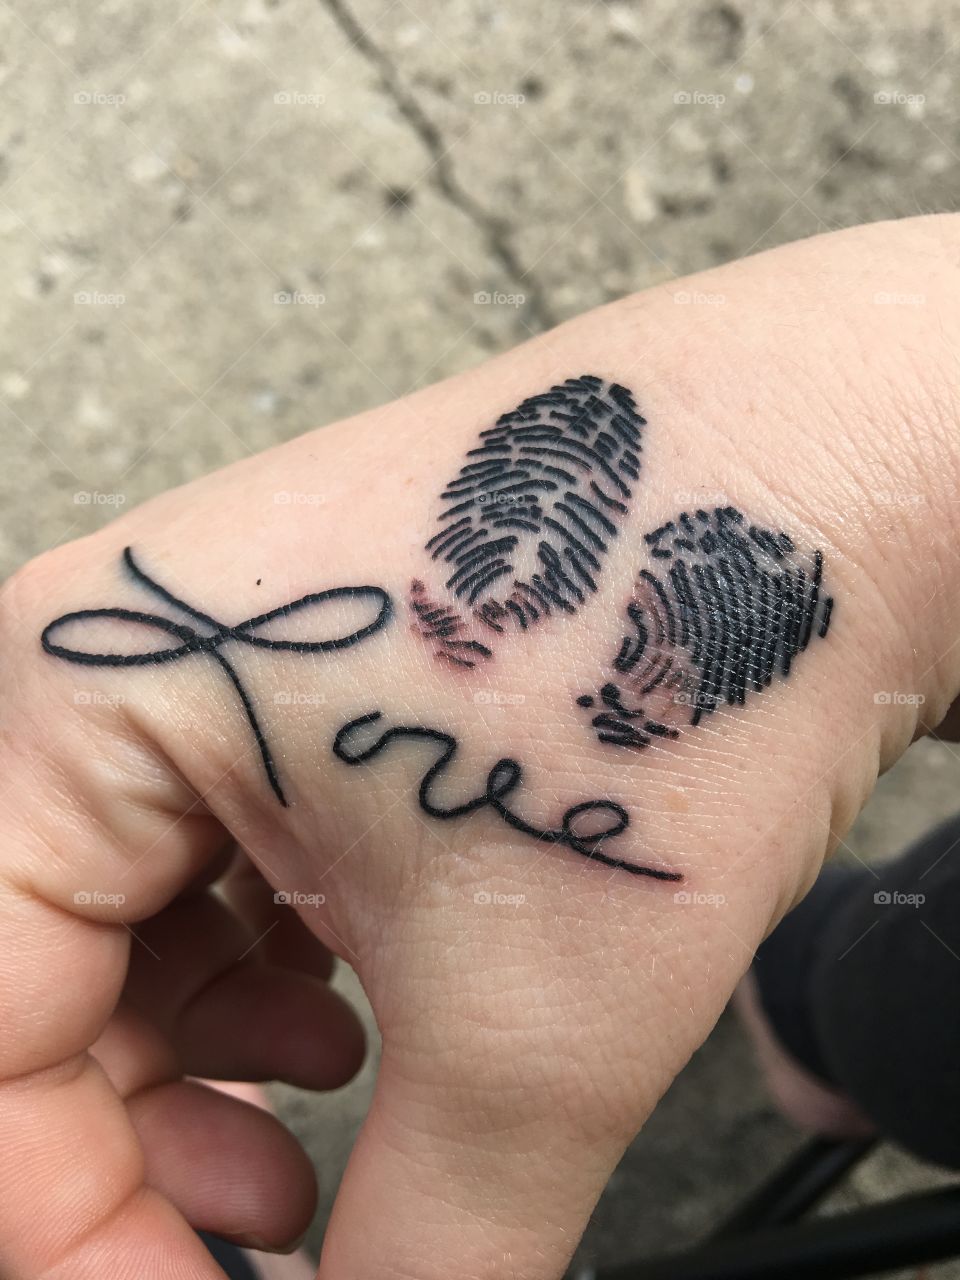 Meaningful tattoo 